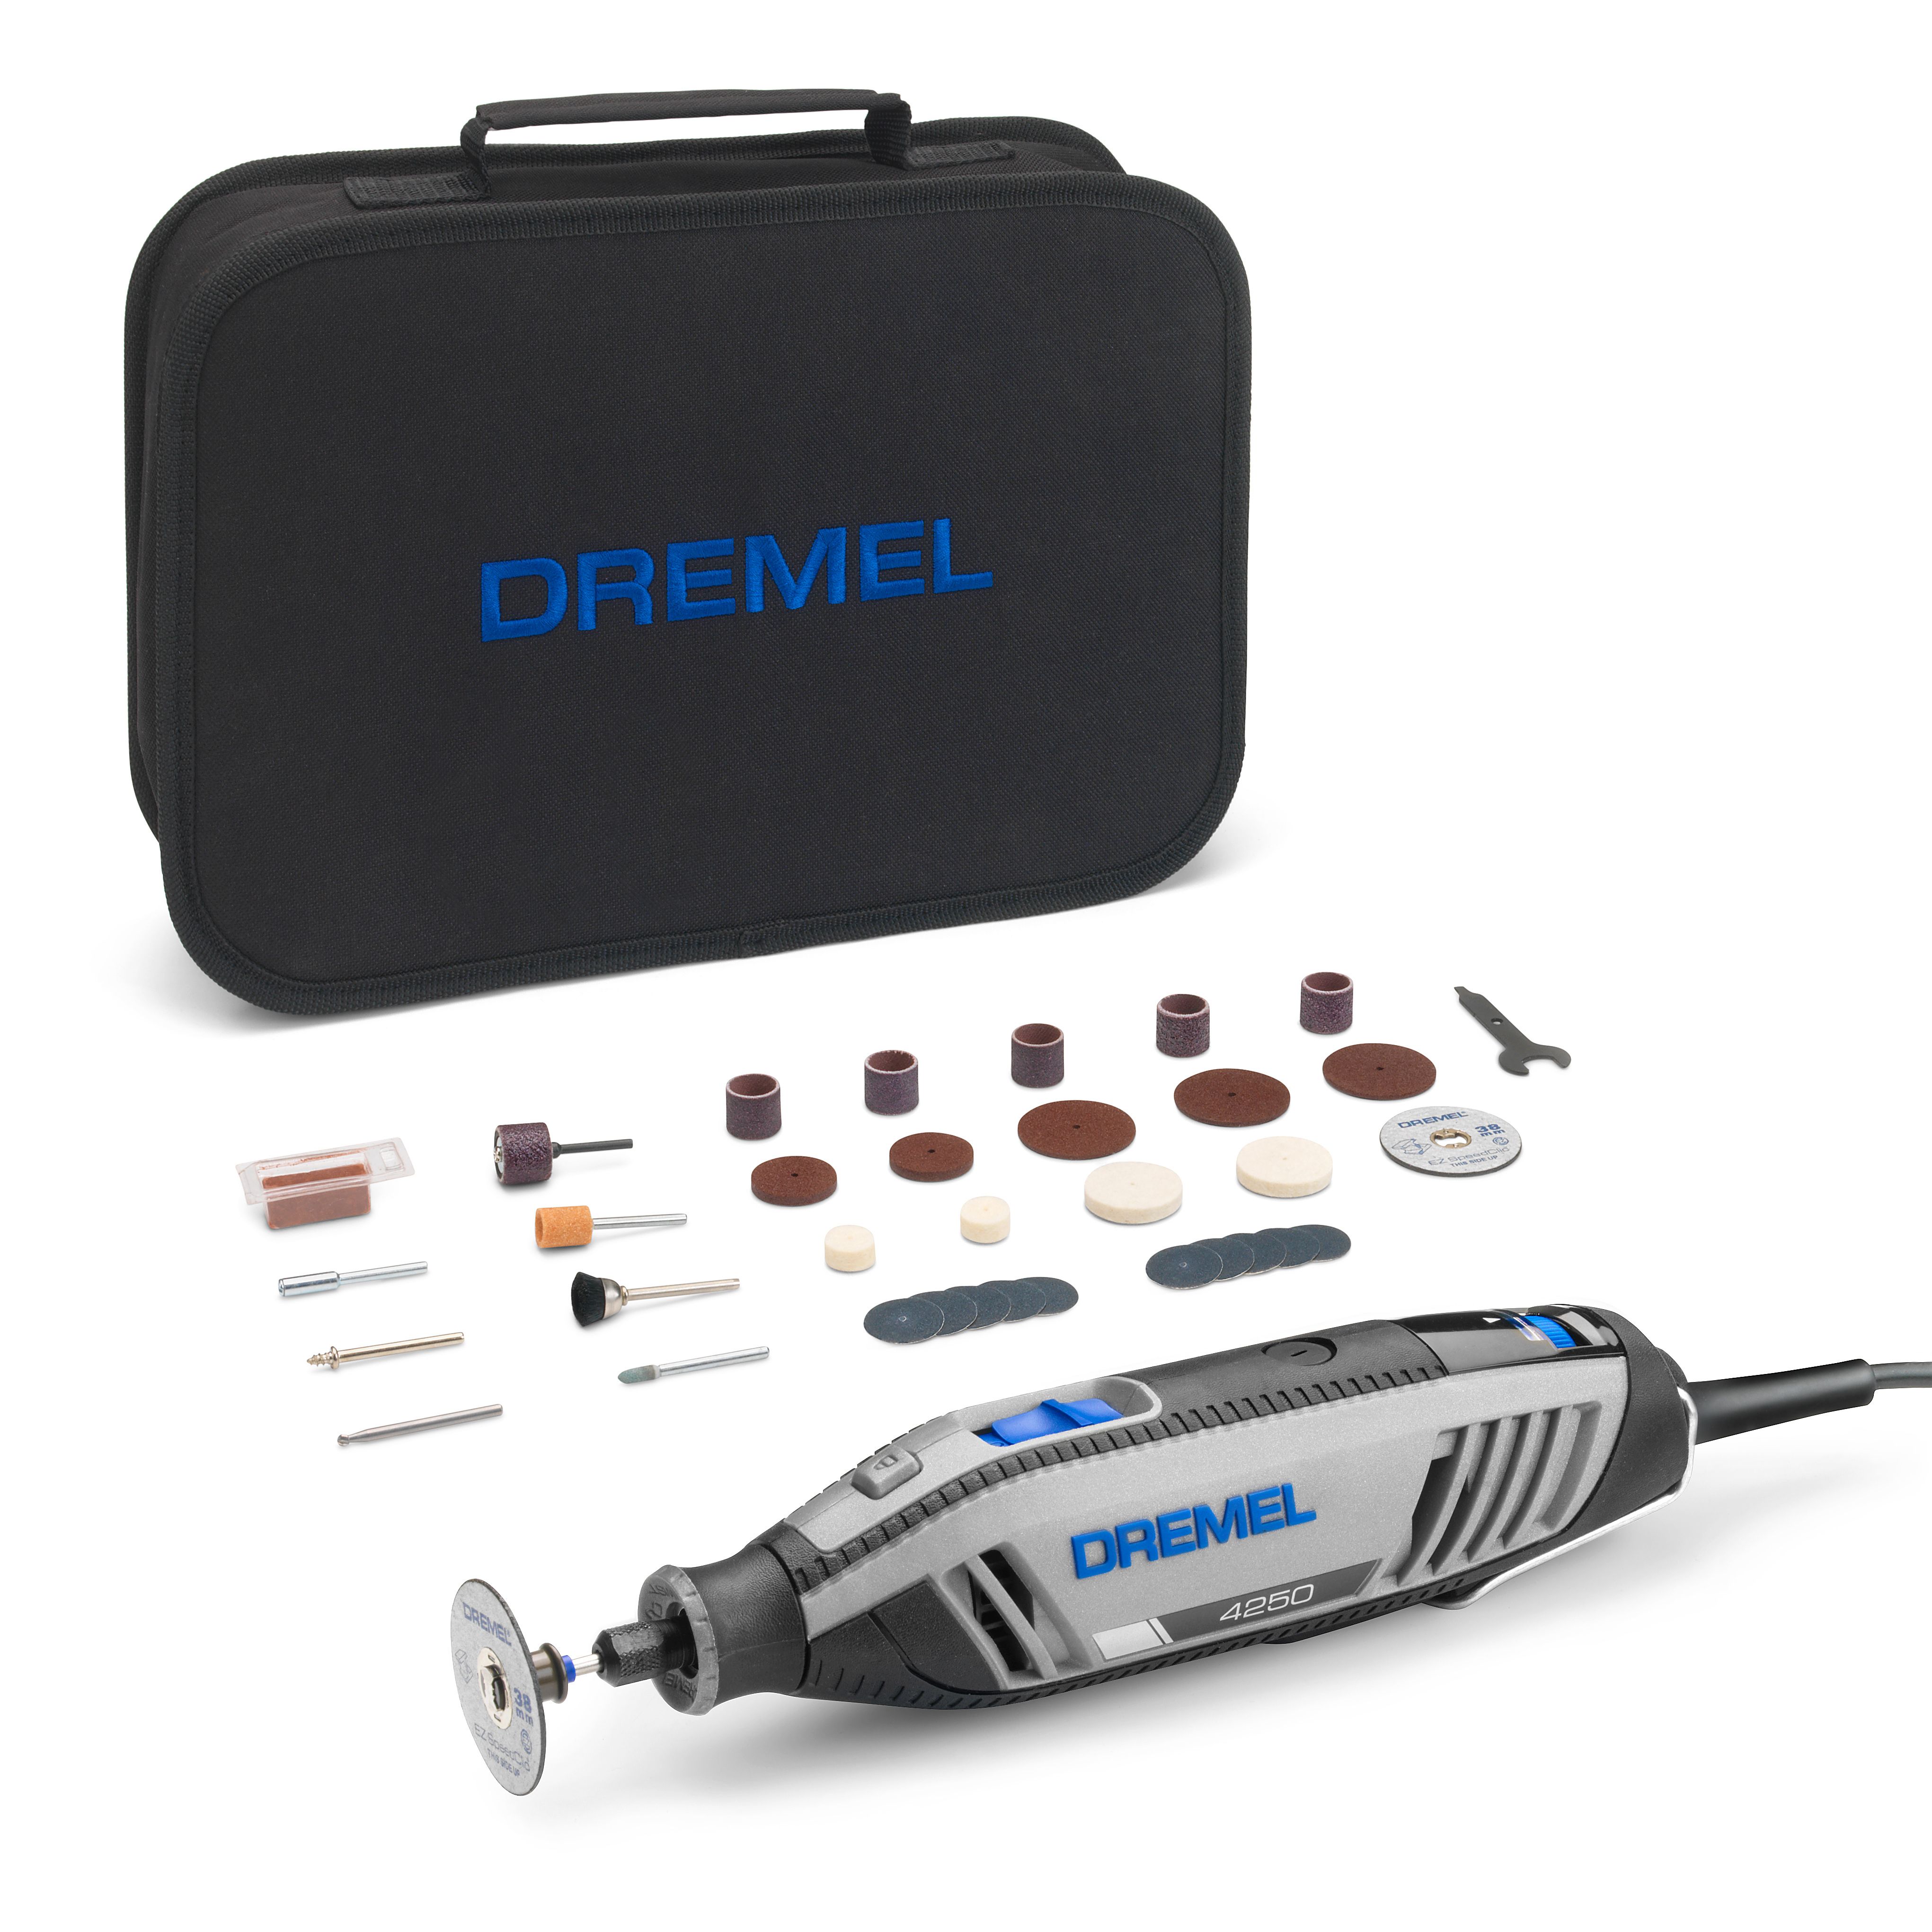 Particularly versatile and precise: Dremel 4300 multitool - Bosch Media  Service